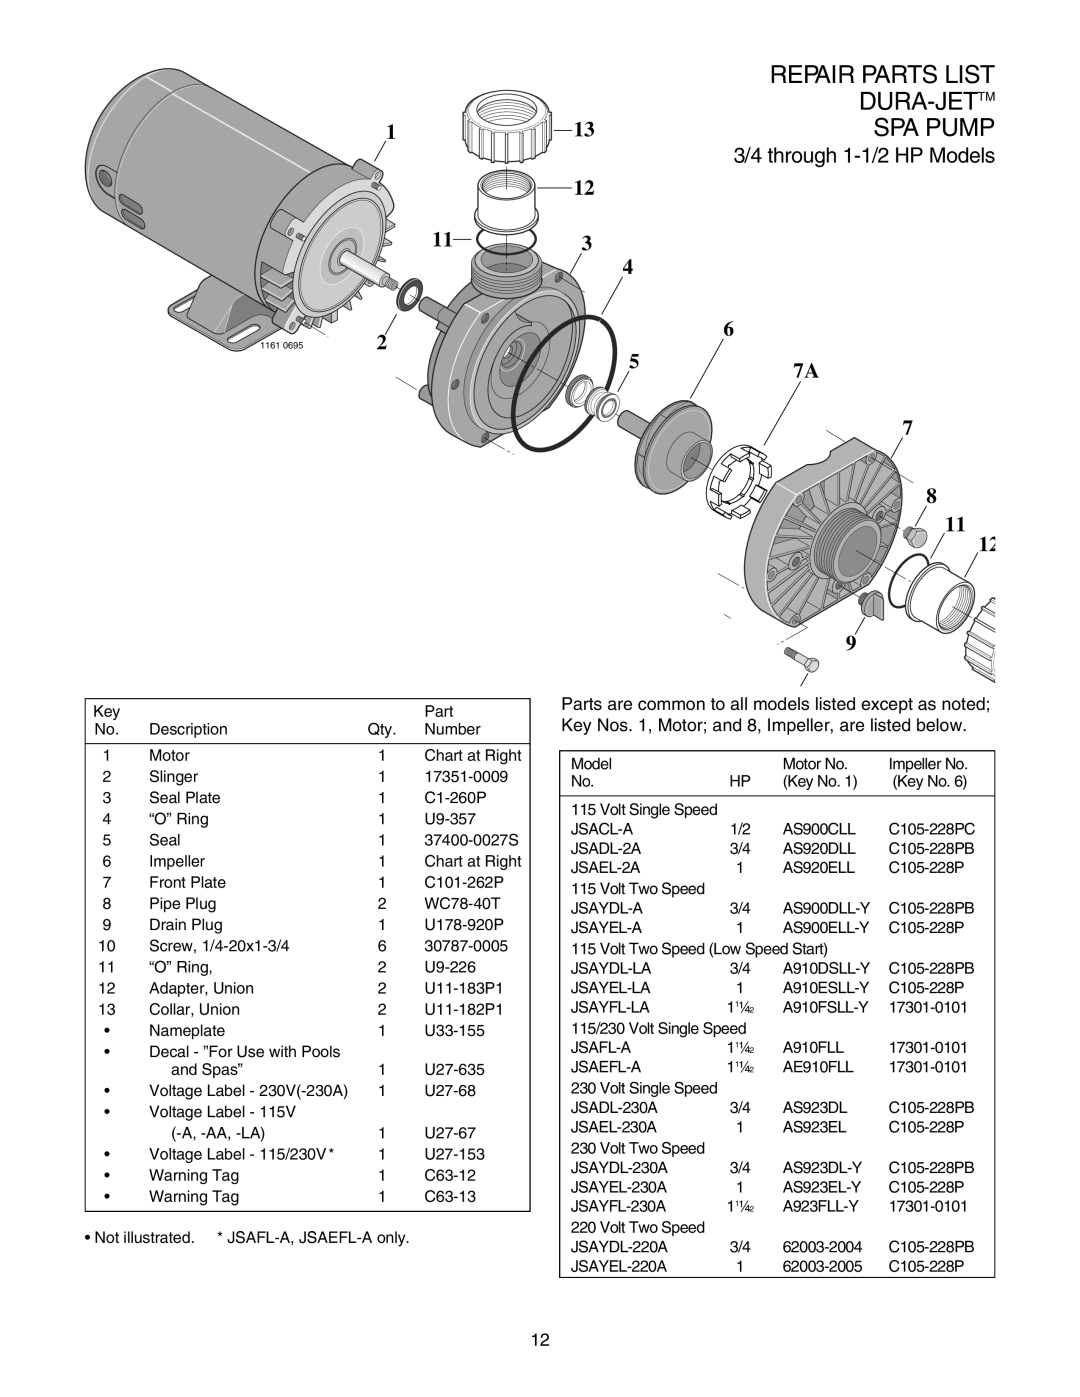 Pentair JSAYDL owner manual Repair Parts List, Dura-Jettm, Spa Pump, 3/4 through 1-1/2HP Models 